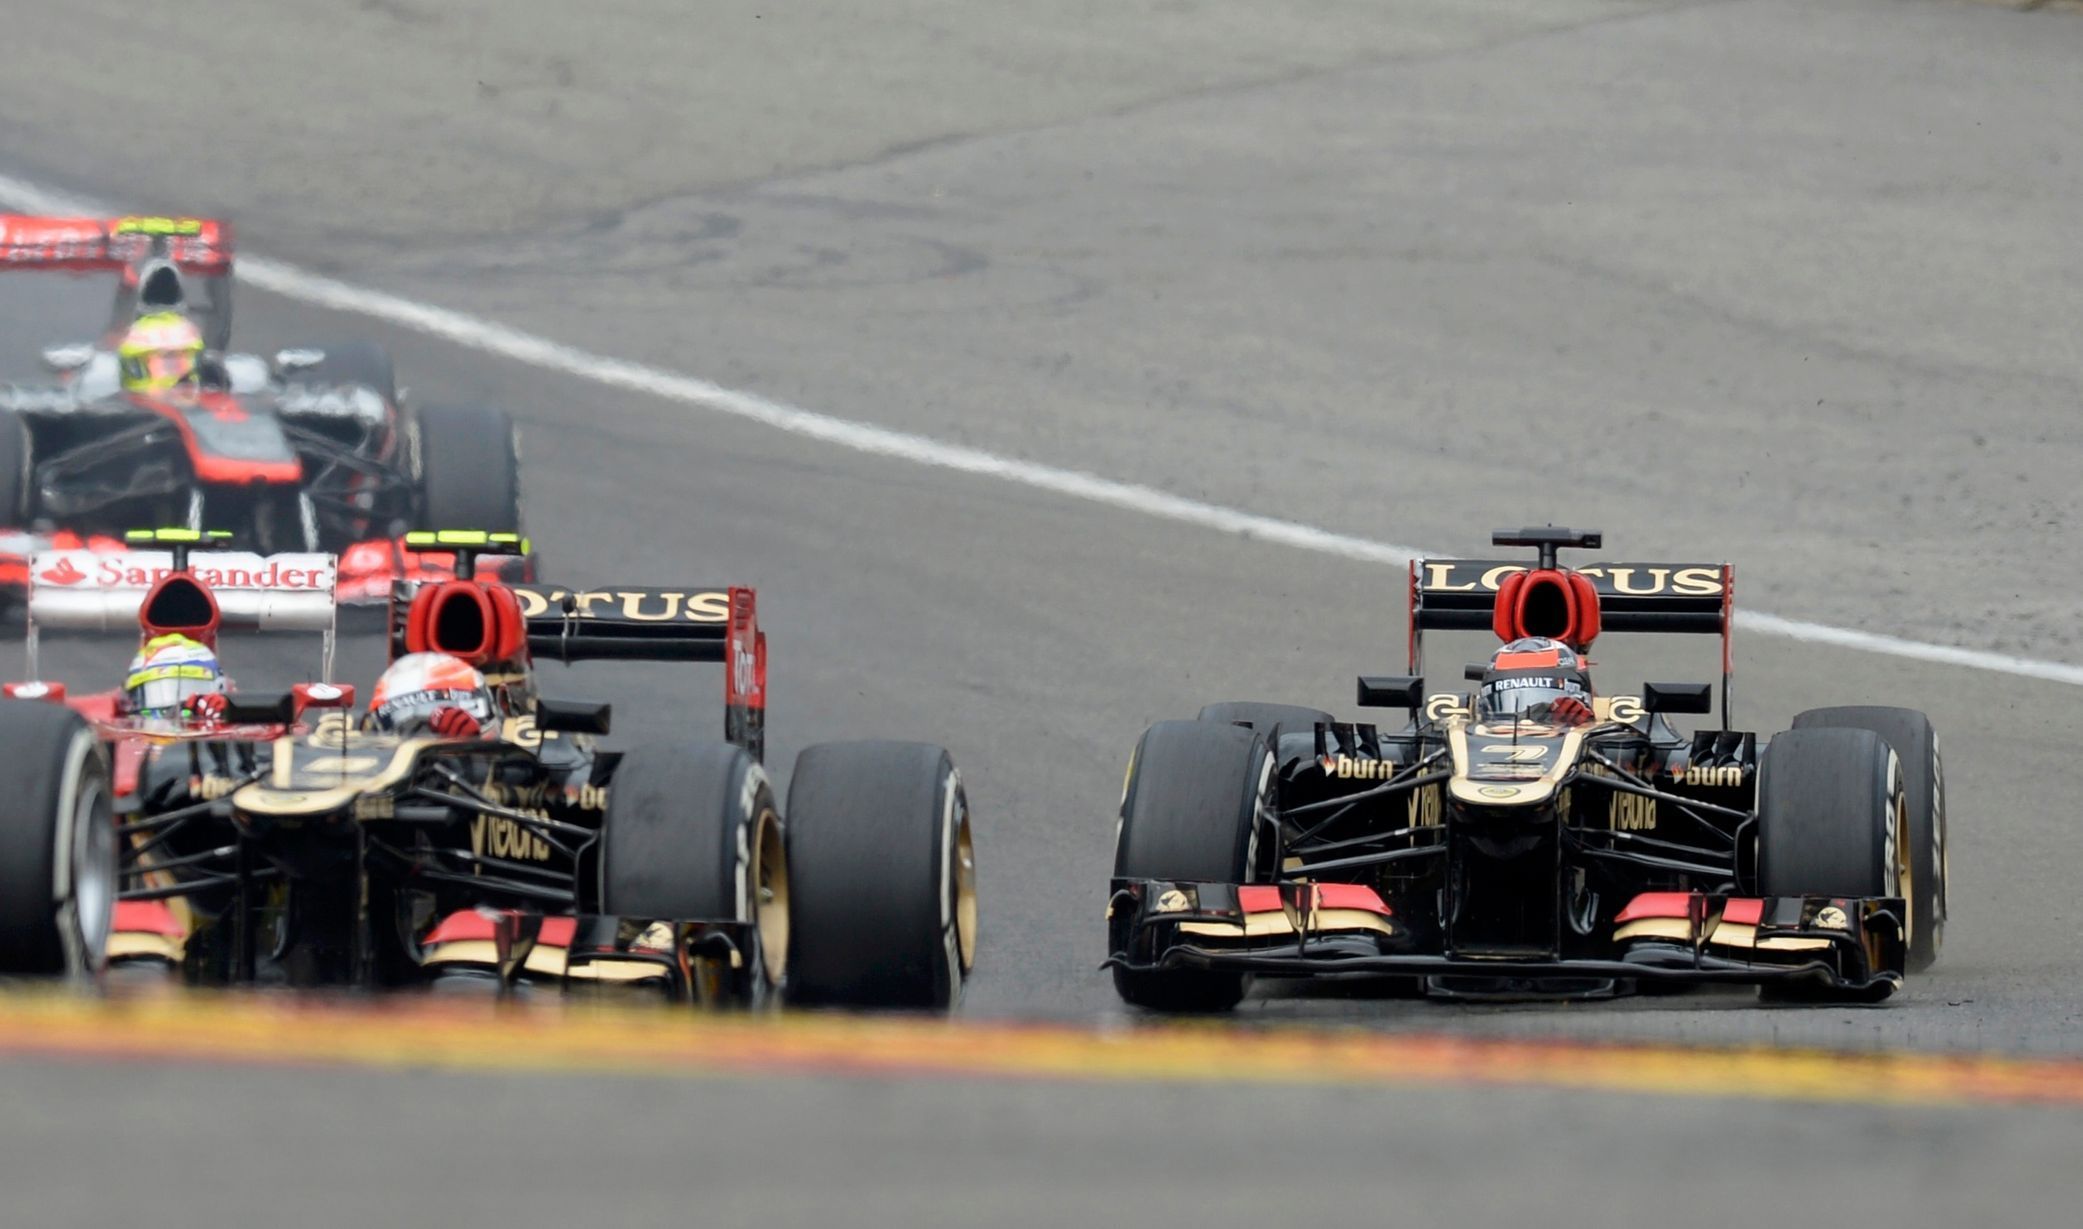 Formule 1, VC Belgie 2013: Romain Grosjean a Kimi Räikkönen, oba Lotus